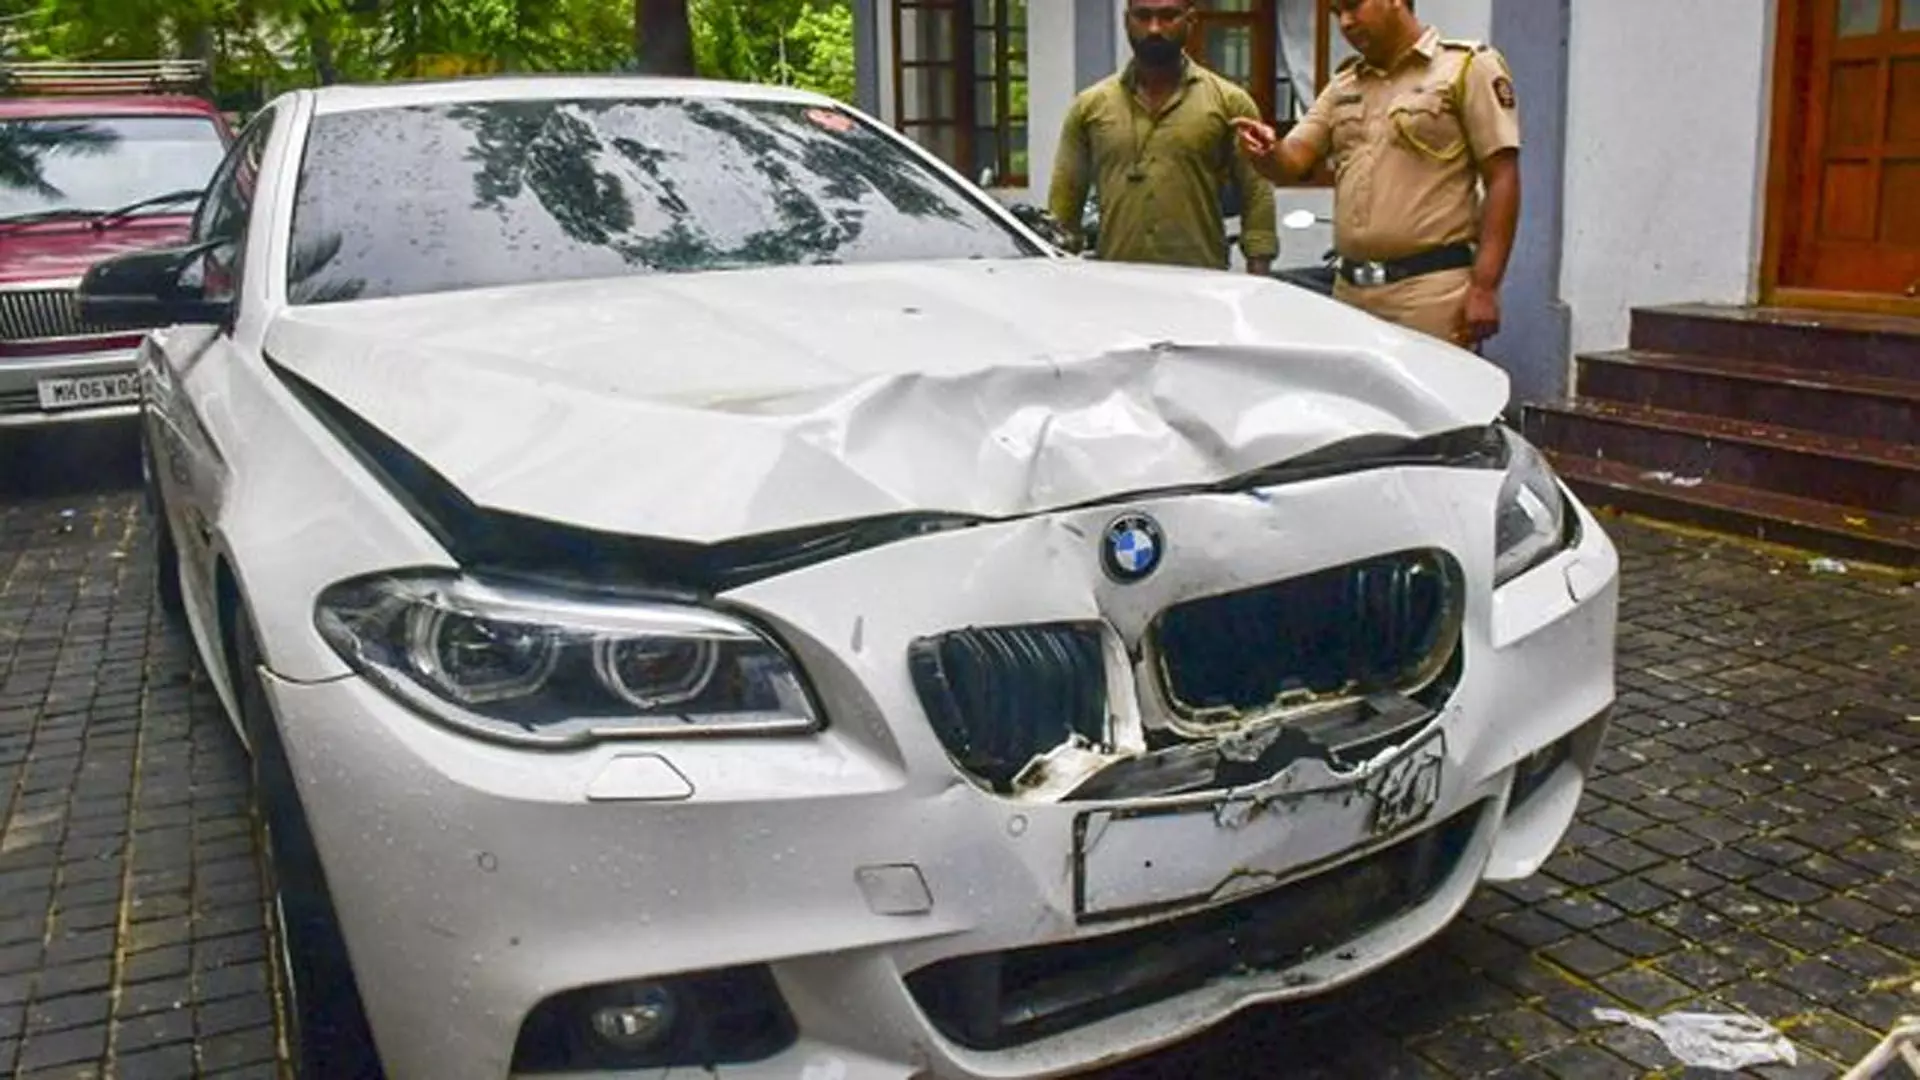 Mumbai BMW accident: 24 वर्षीय फरार कार चालक के खिलाफ एलओसी जारी